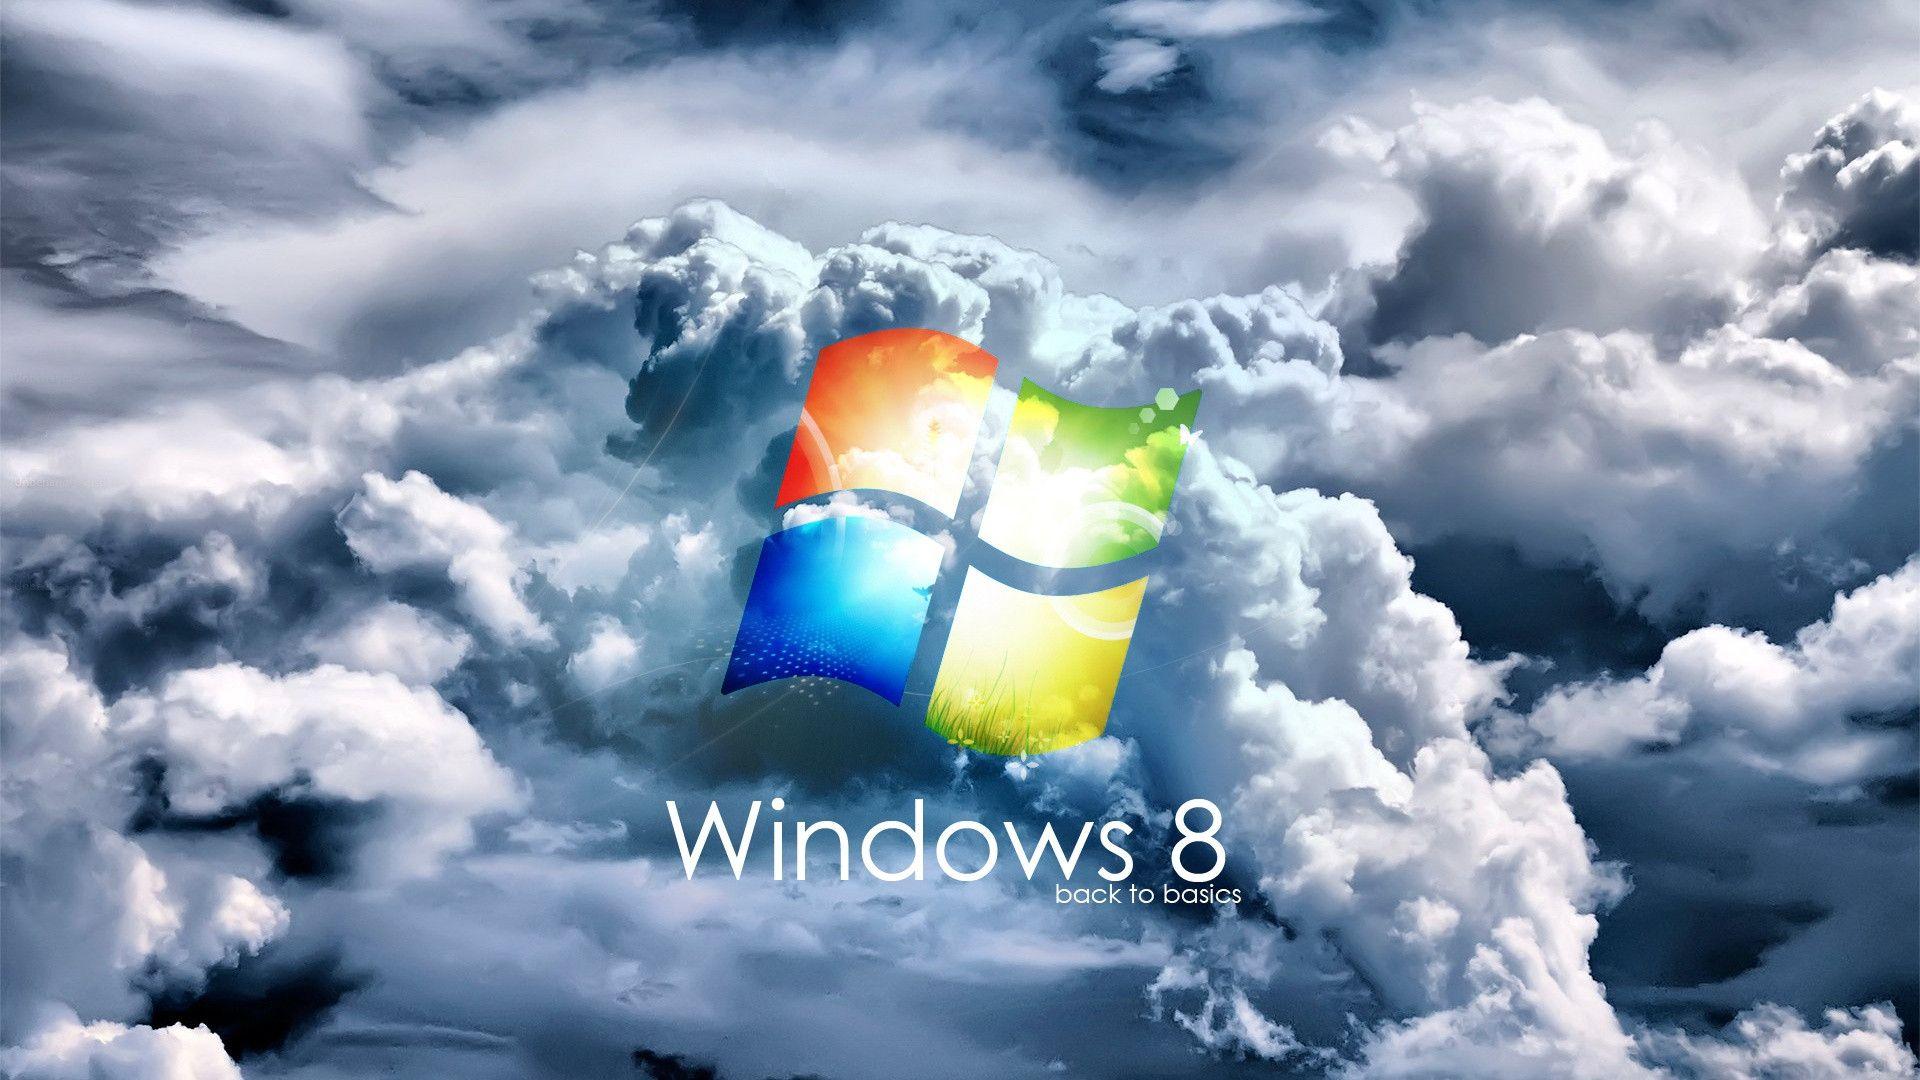 Windows 8 back to basics Wallpaperx1080 resolution